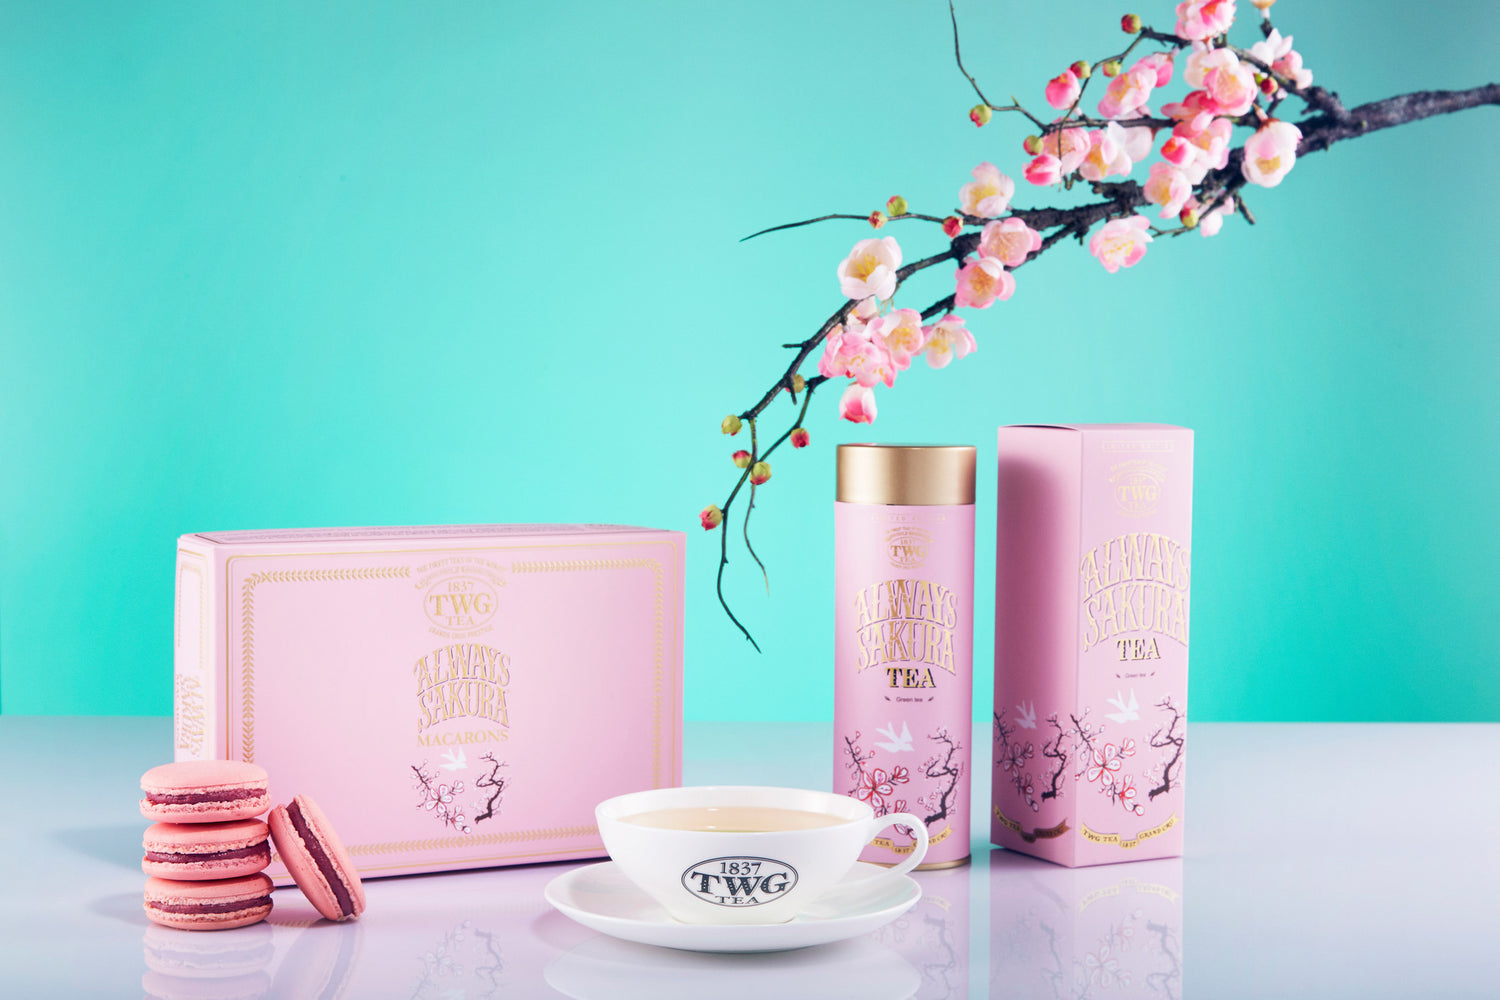 TWG Tea comes into bloom this Spring with Always Sakura Tea